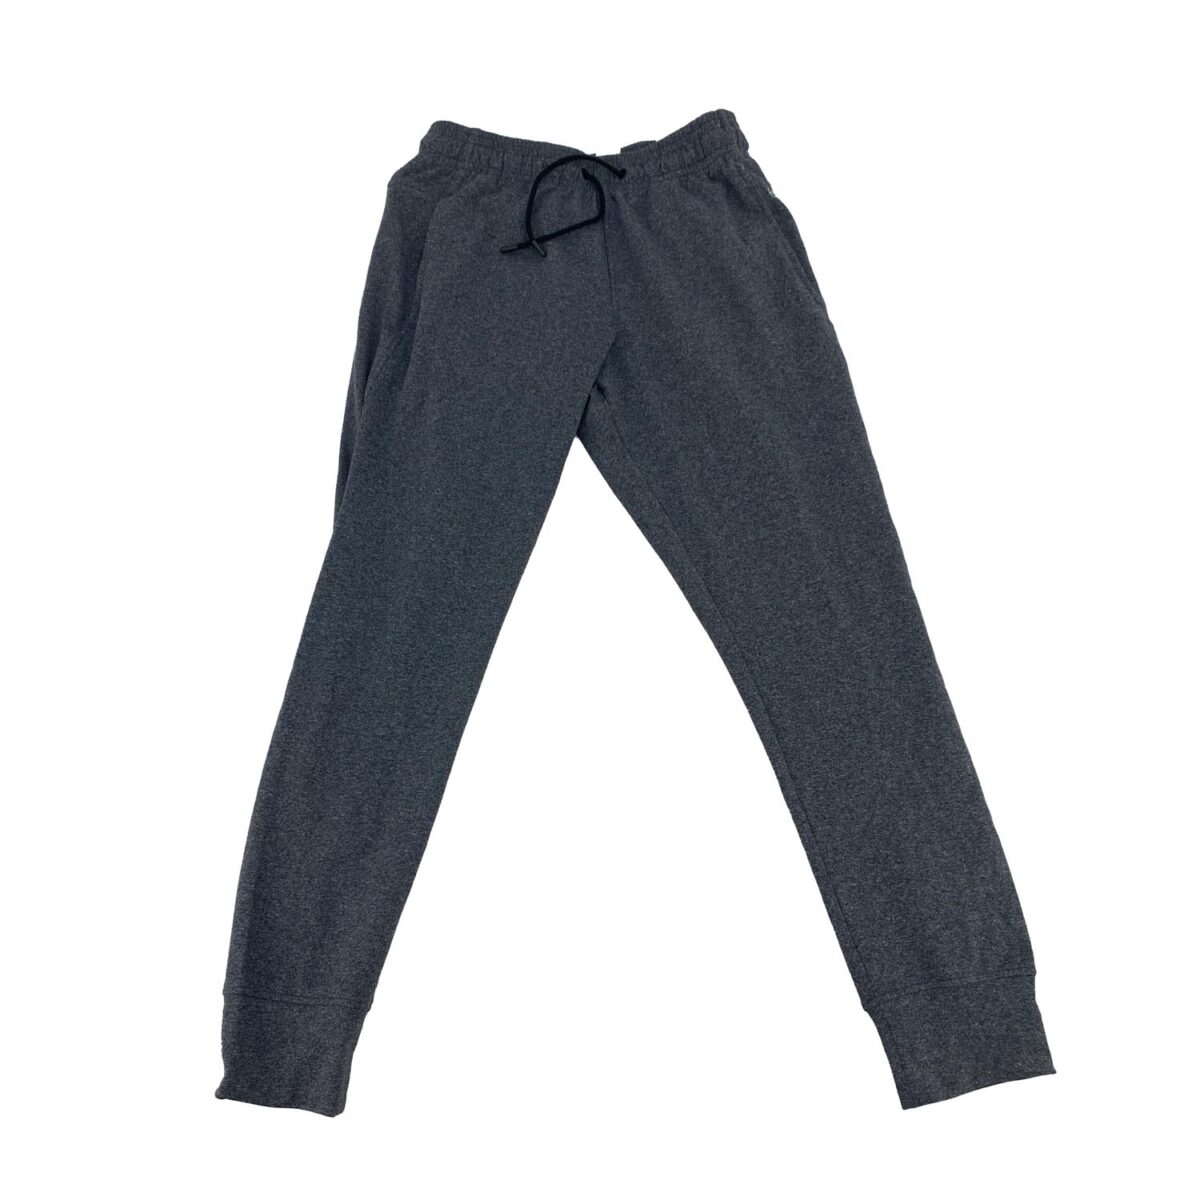 Gaiam Women’s Grey Sweatpants / Various Sizes